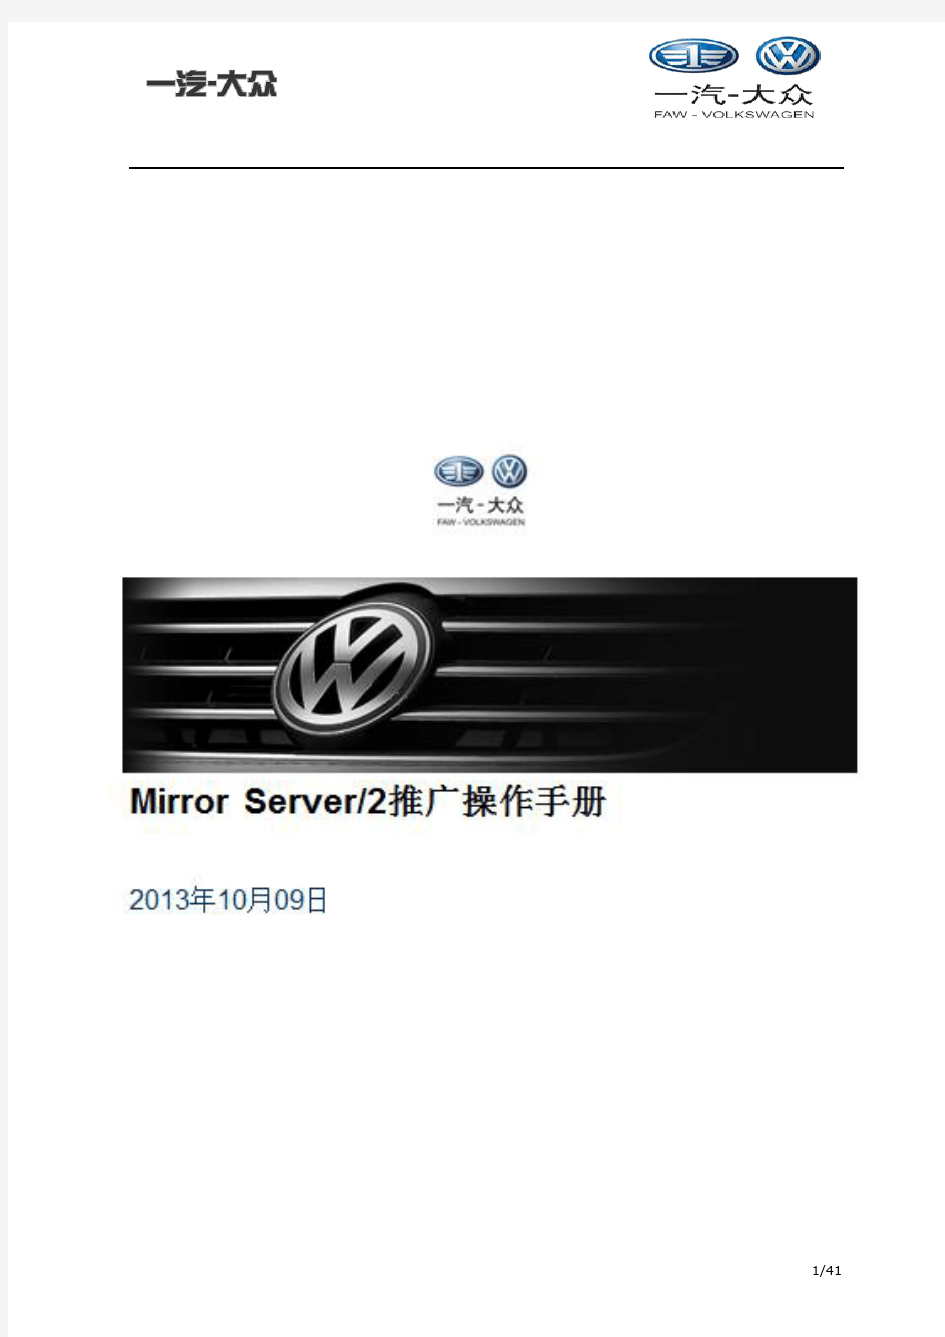 MirrorServer2大众操作手册_v3.1.1